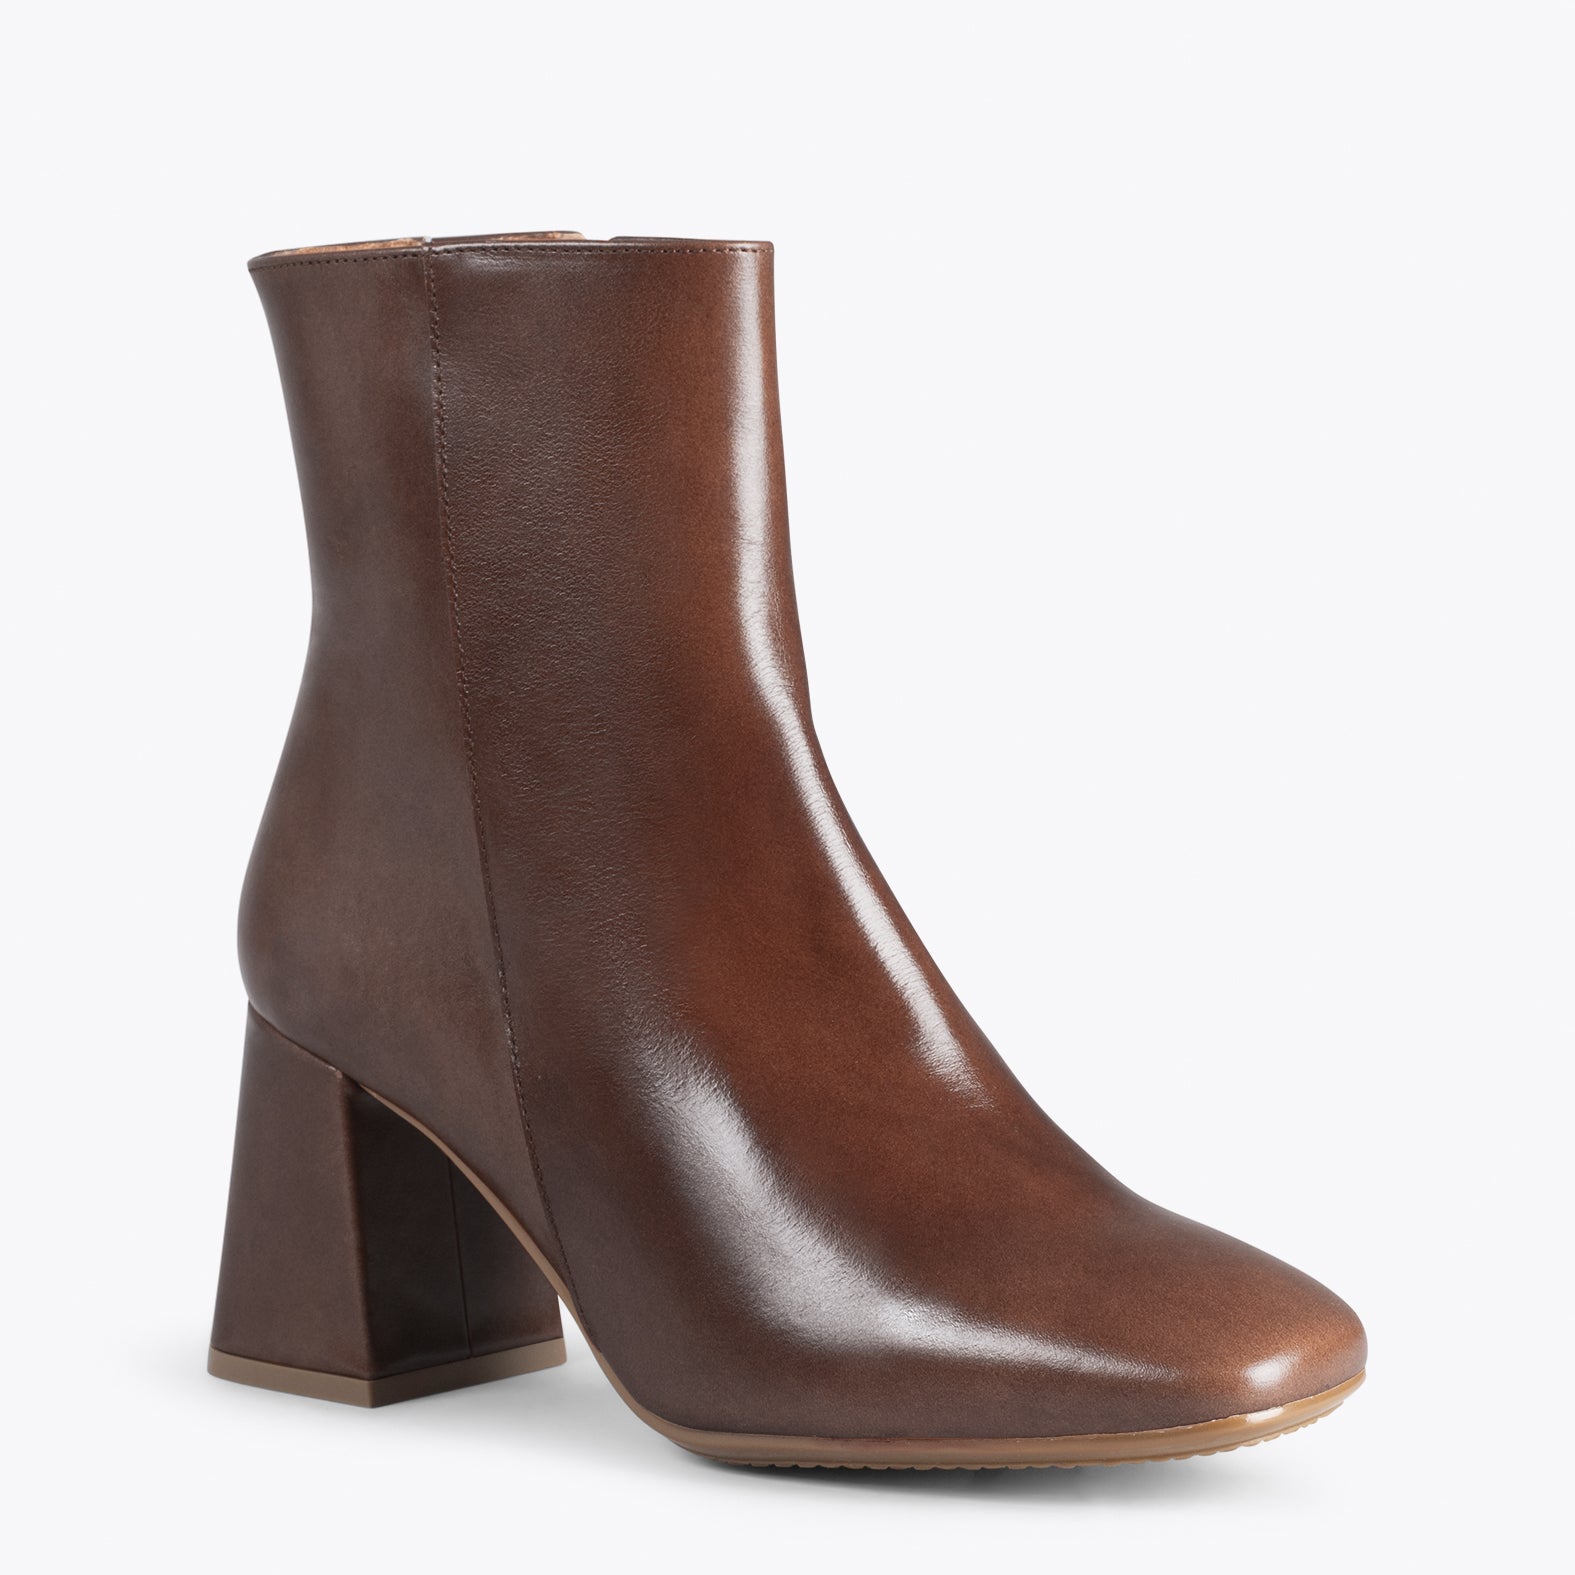 PARIS – BROWN square toe bootie with block heel